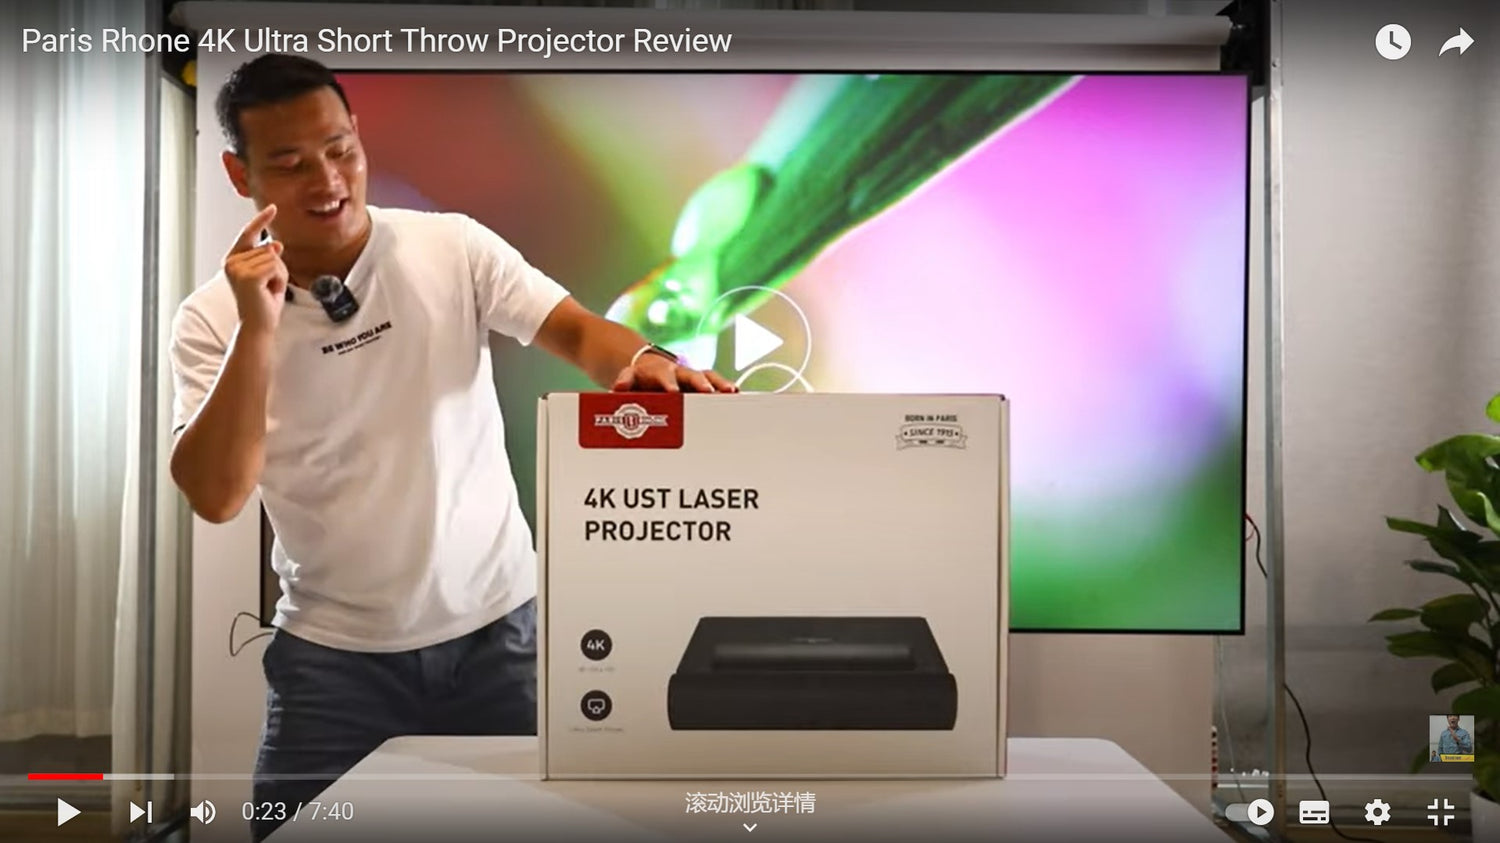 Paris Rhone 4K Ultra Short Throw Projector Review